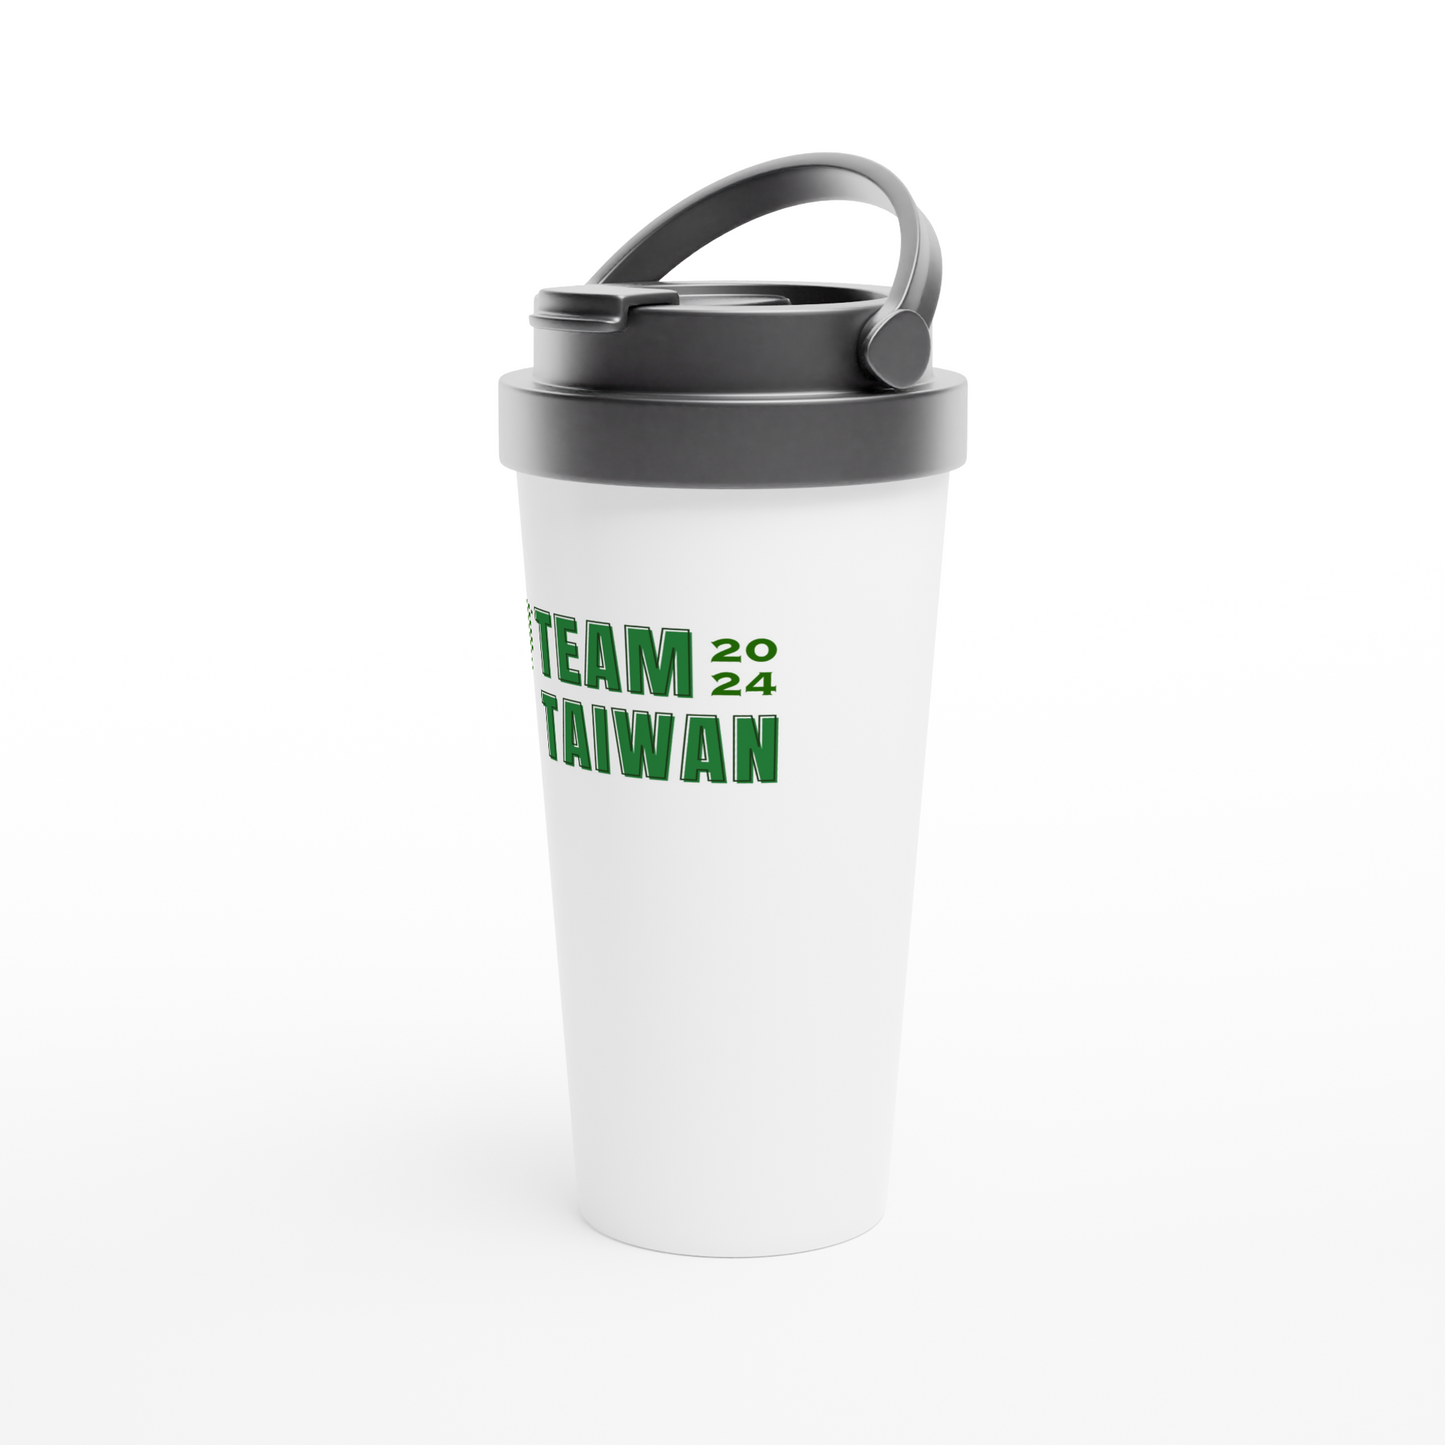 Team Taiwan 2024 White 15oz Stainless Steel Travel Mug